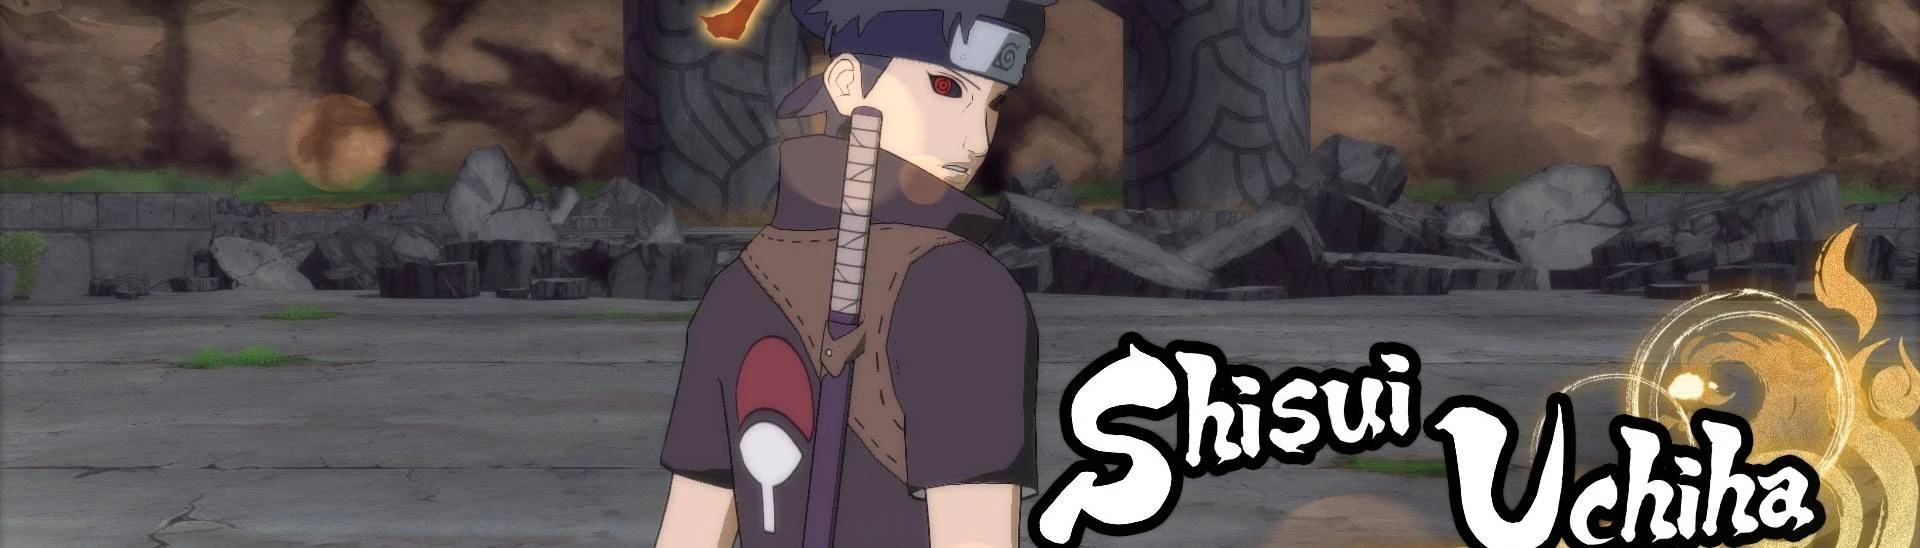 Naruto Posts on X: Shisui Uchiha.  / X